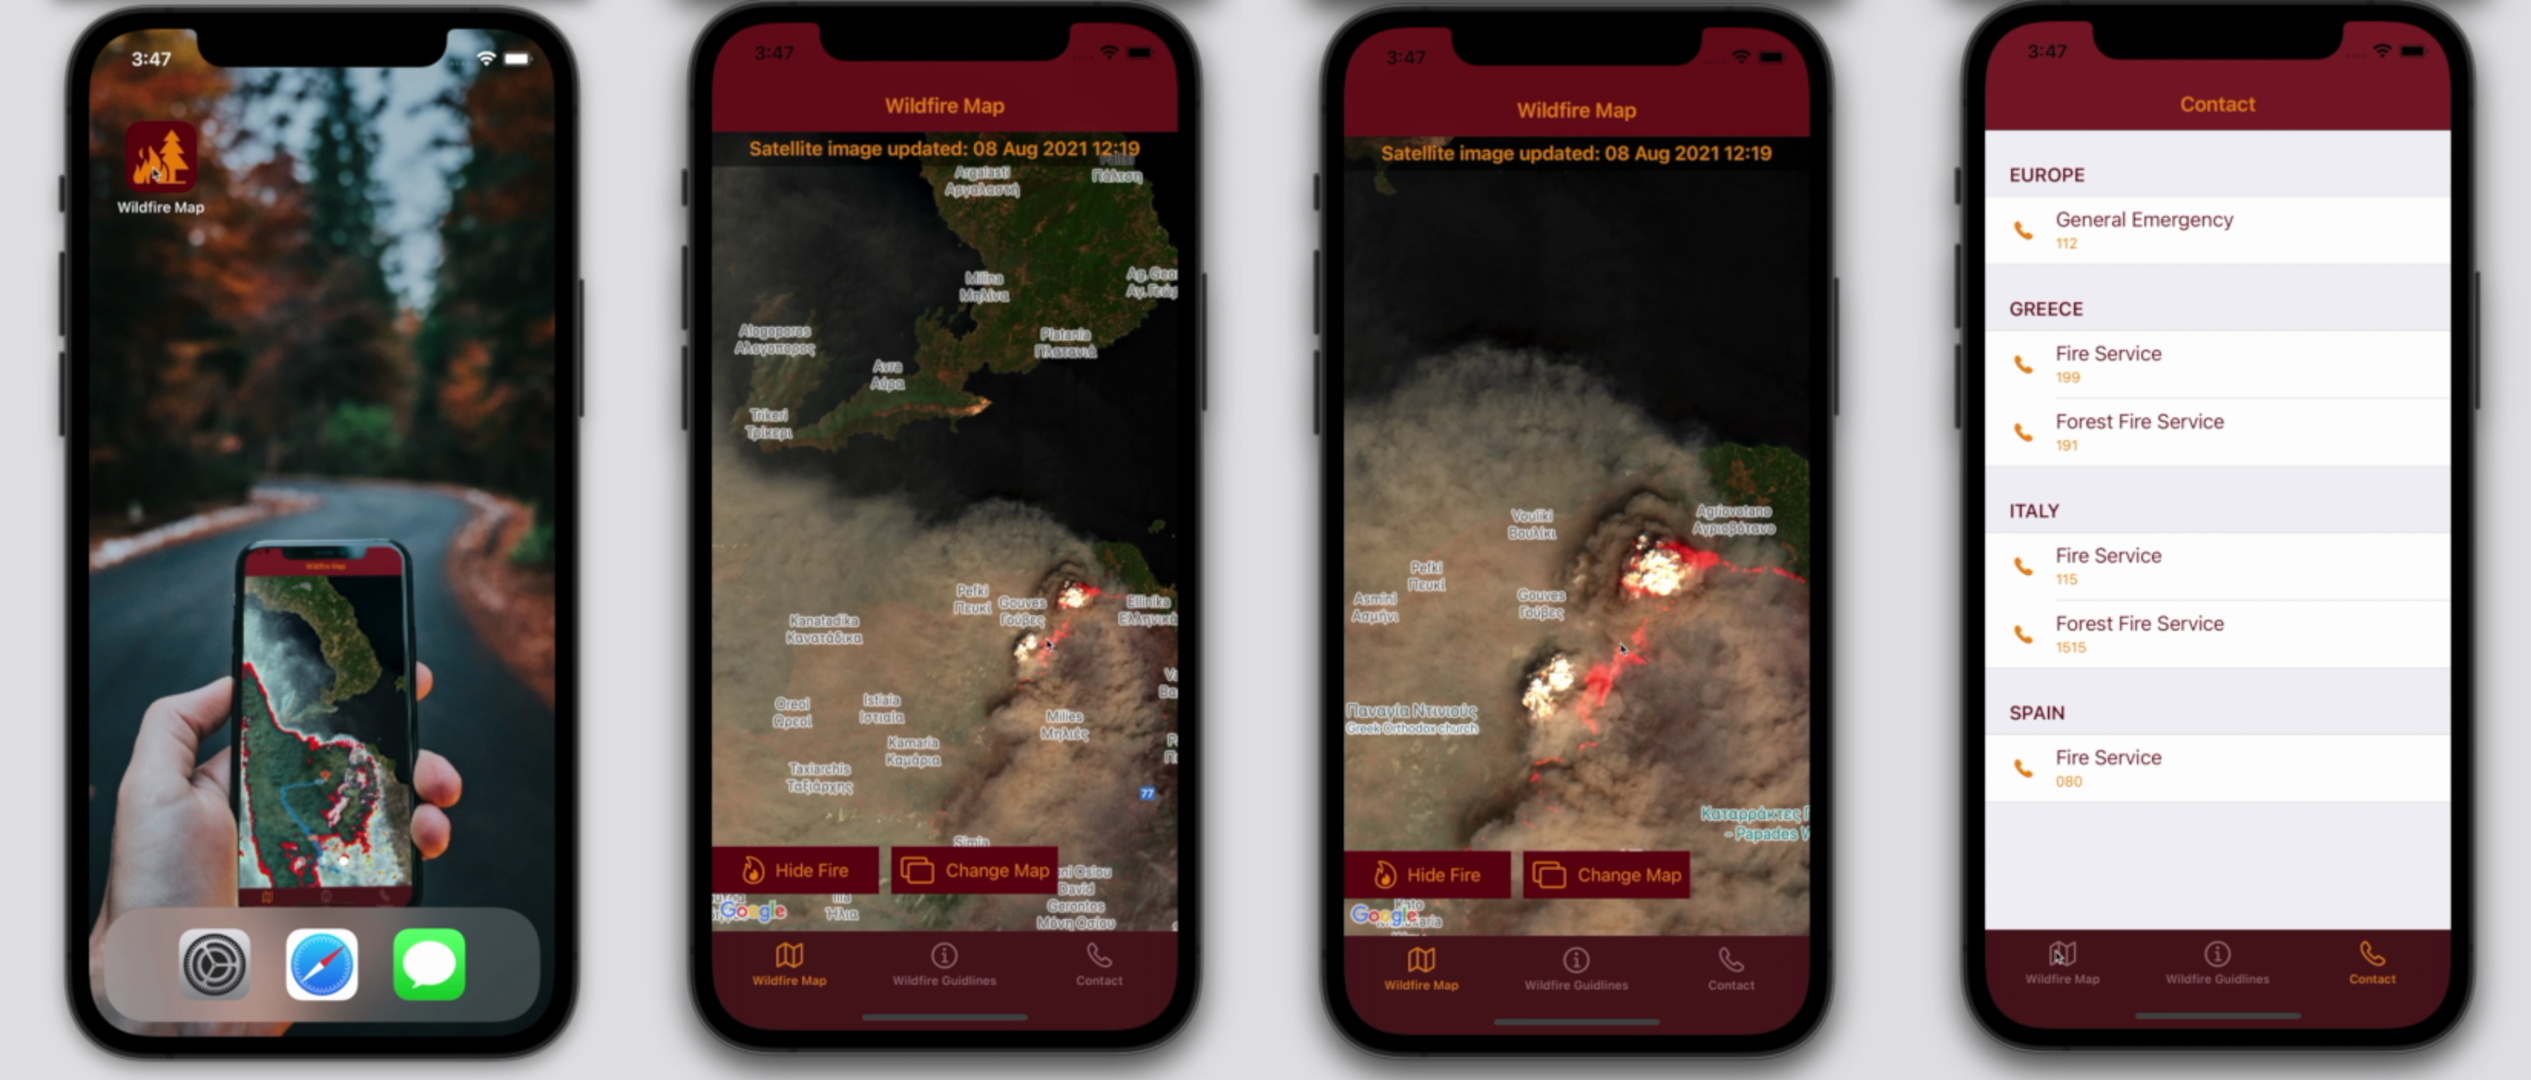 Wildfire Map app